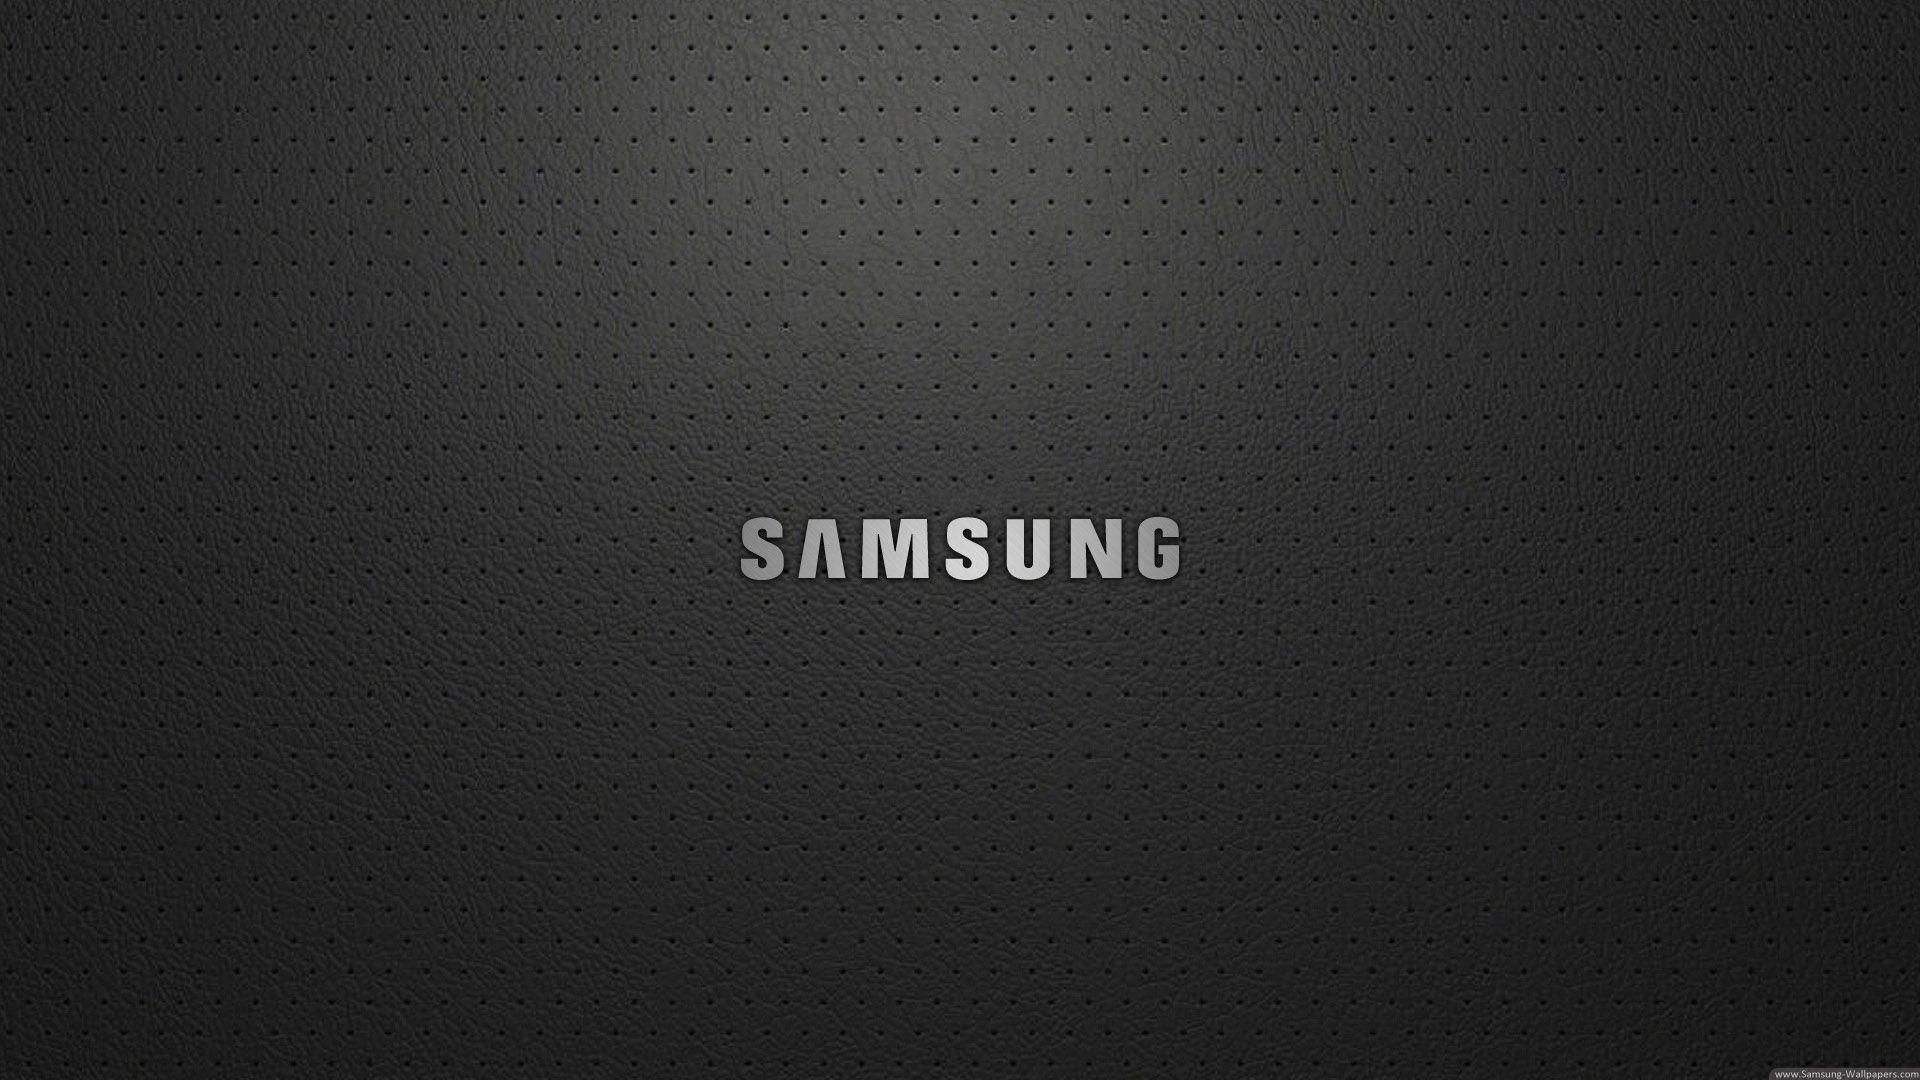 Samsung Galaxy S4 Logo - Samsung Logo Wallpapers - Wallpaper Cave